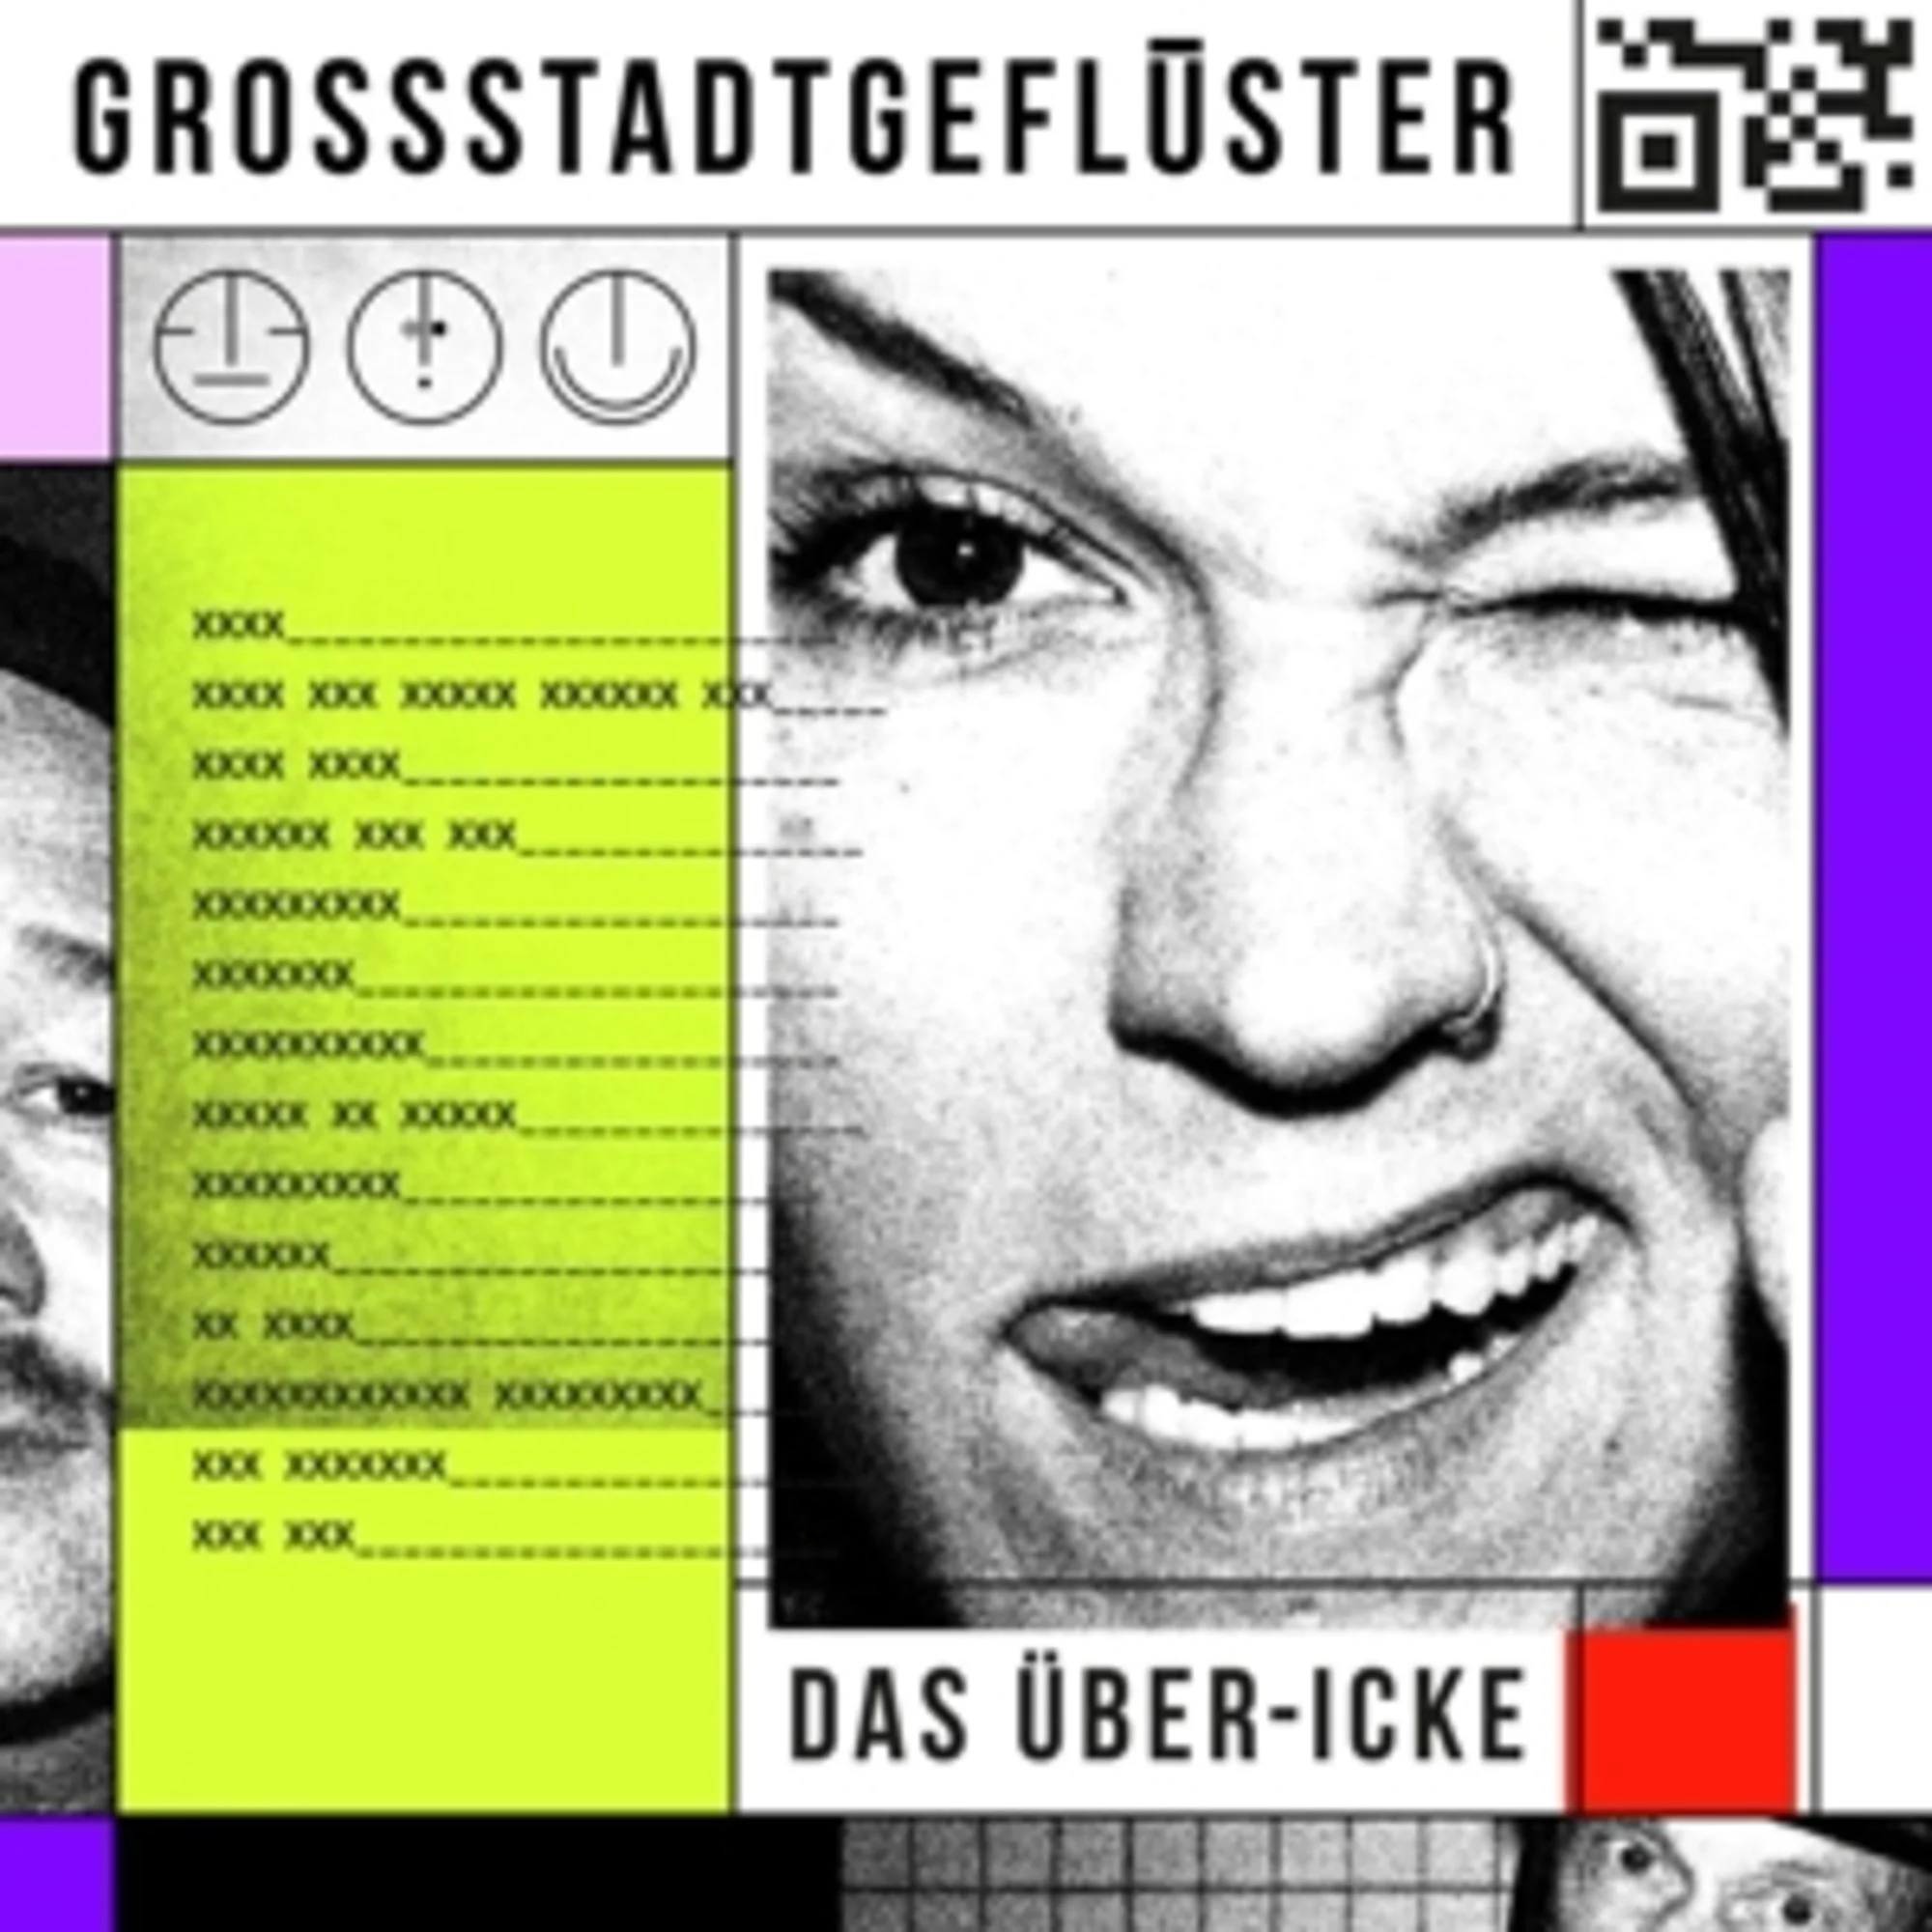 Grossstadtgeflüster DAS ÜBER-ICKE cover artwork